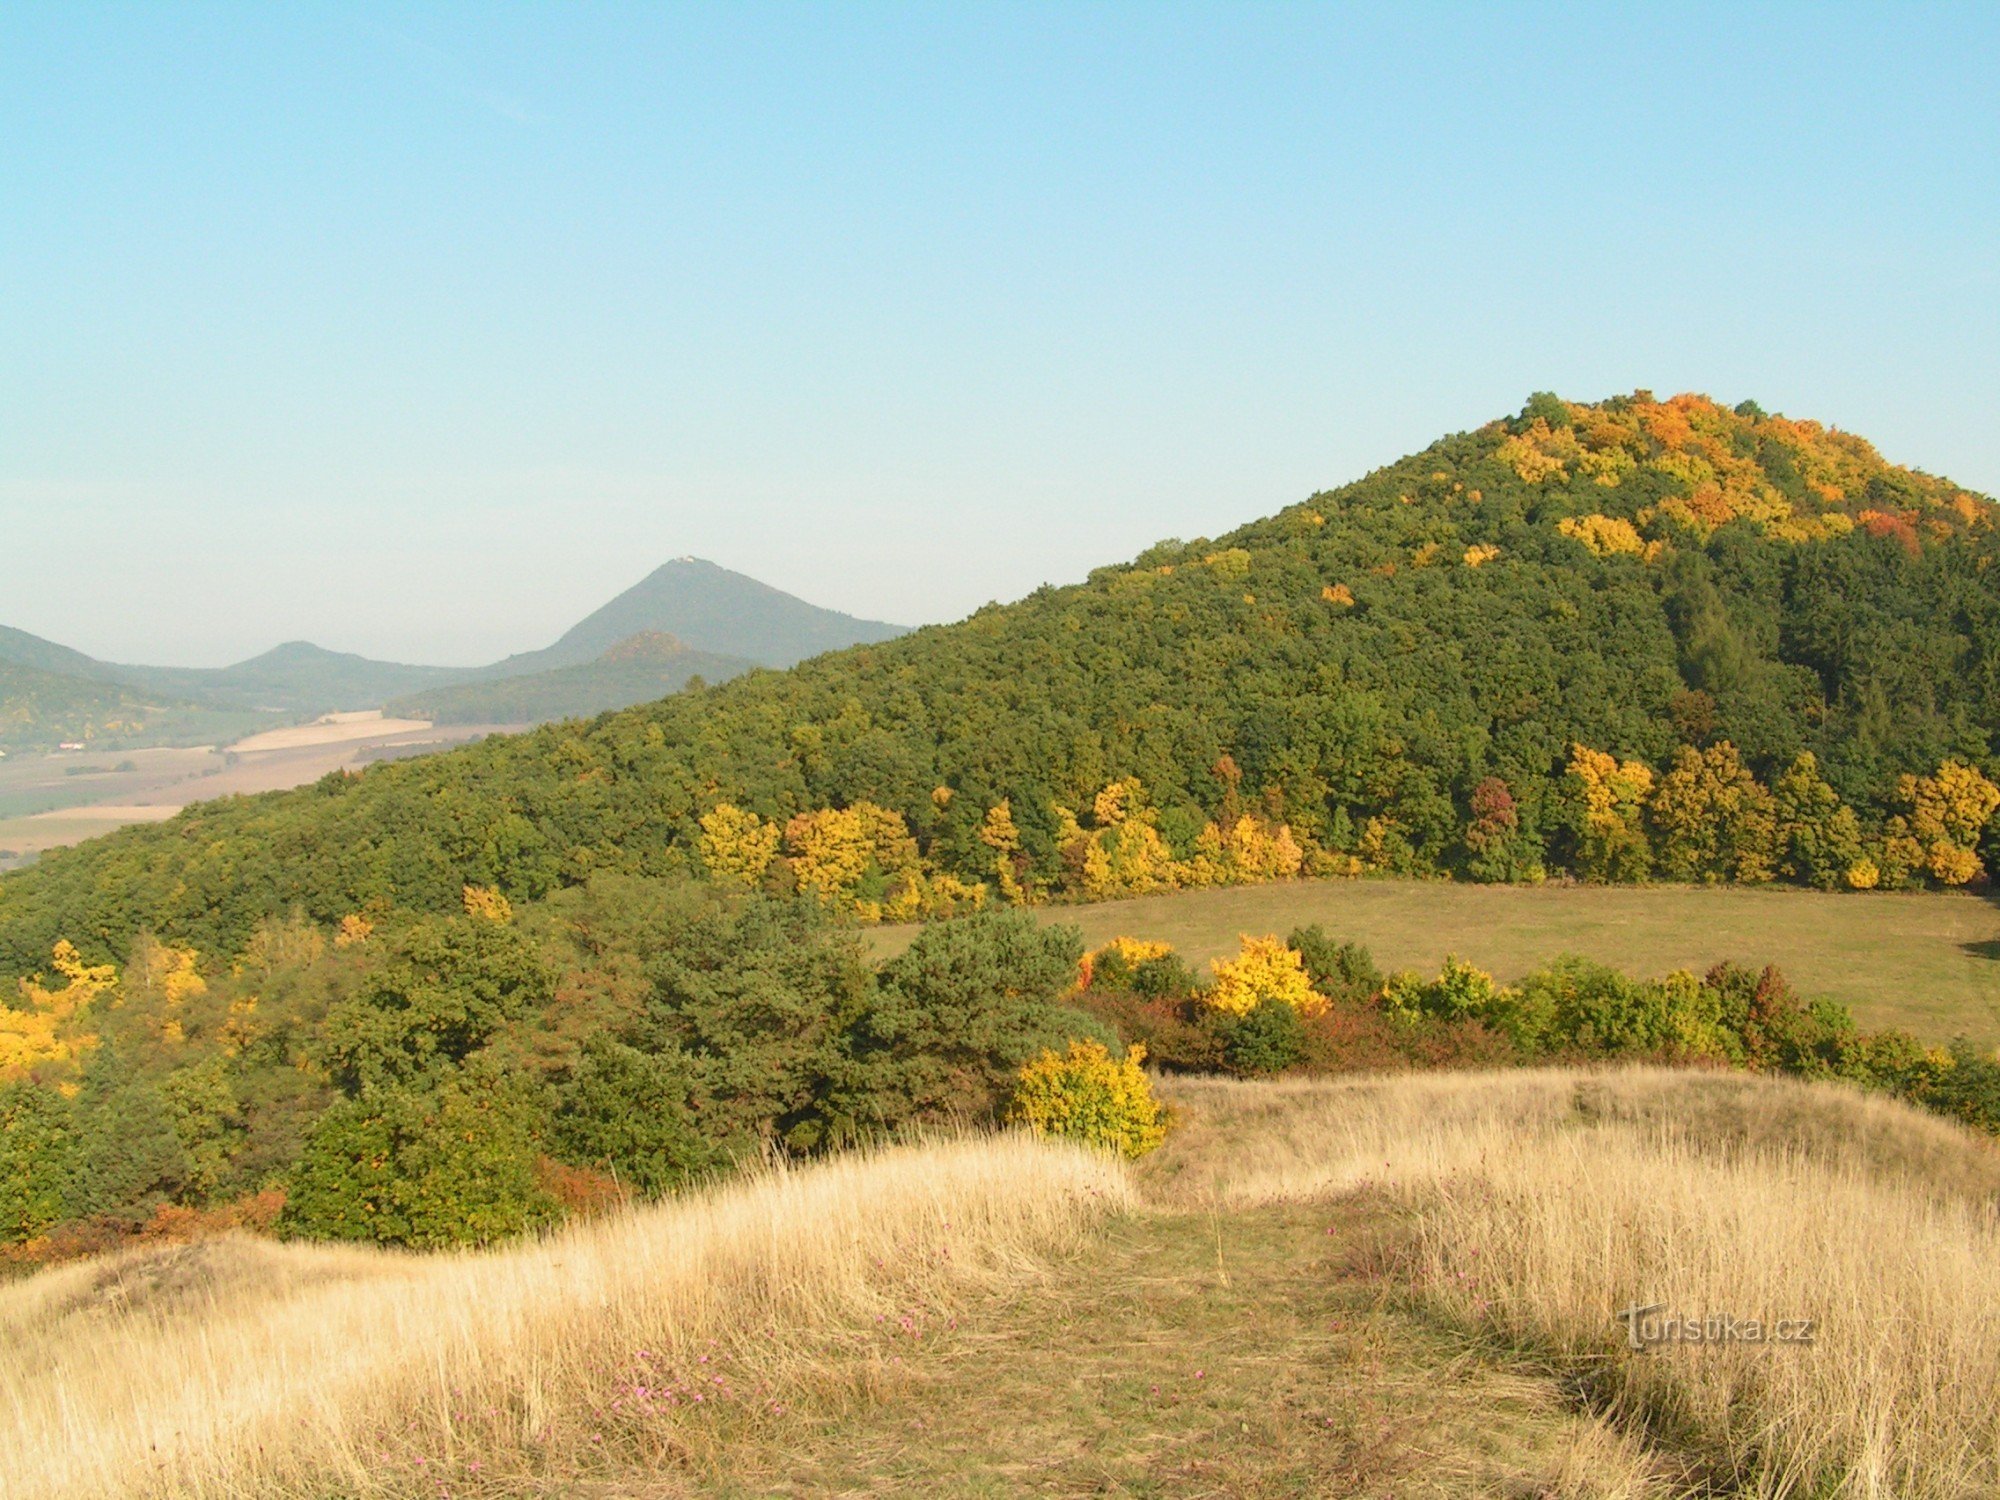 Мілешовка (позаду) і Sutomský vrch від Holé vrch